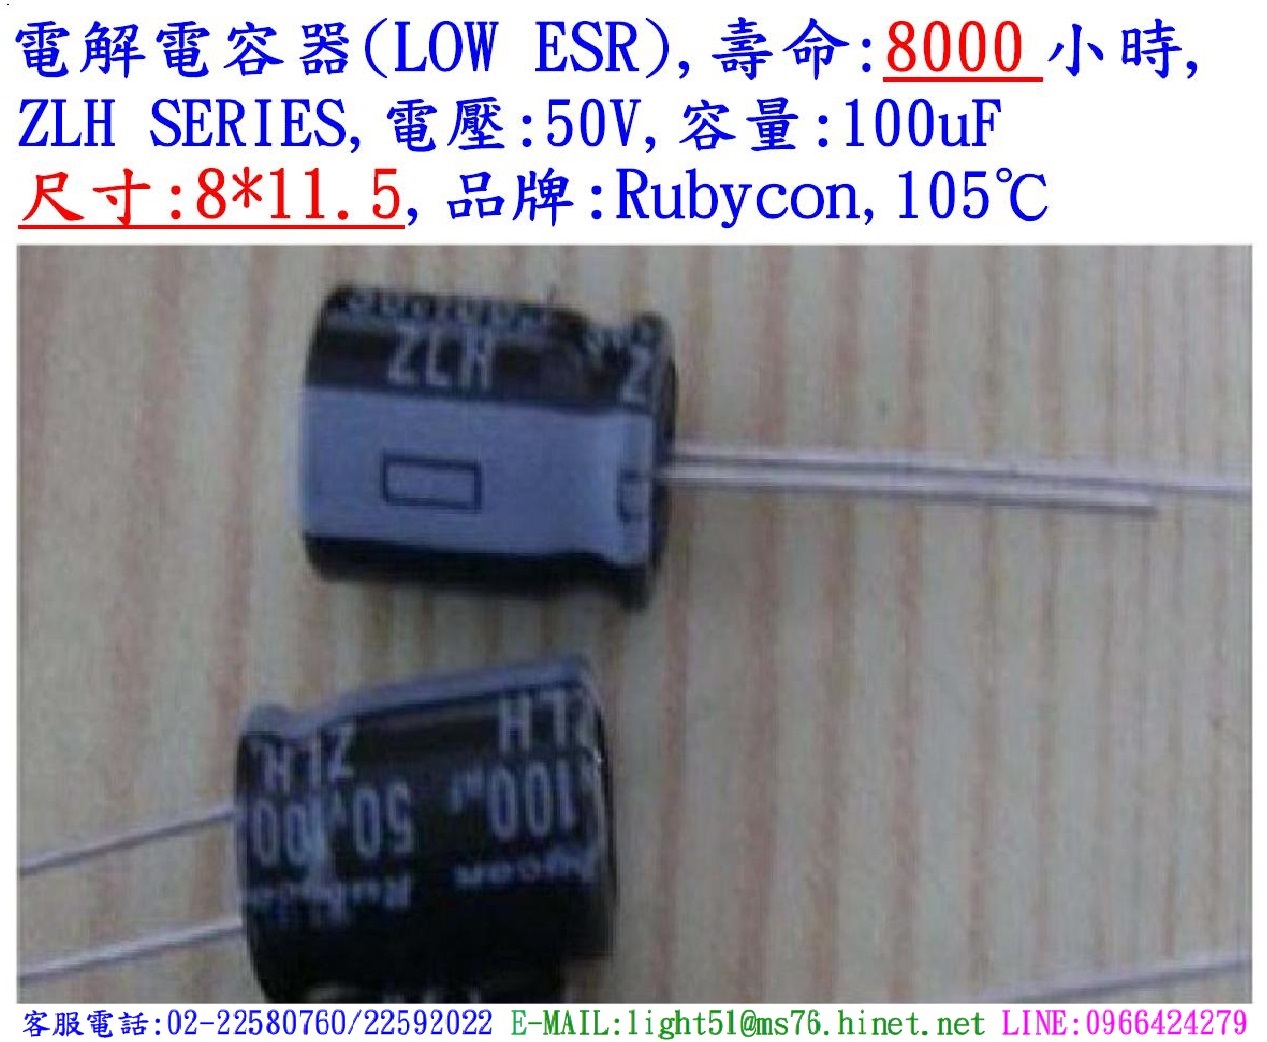 ZLH,50V,100uF,尺寸:8*11.5,電解電容器(LOW ESR),壽命:8000小時,Rubycon(日本)